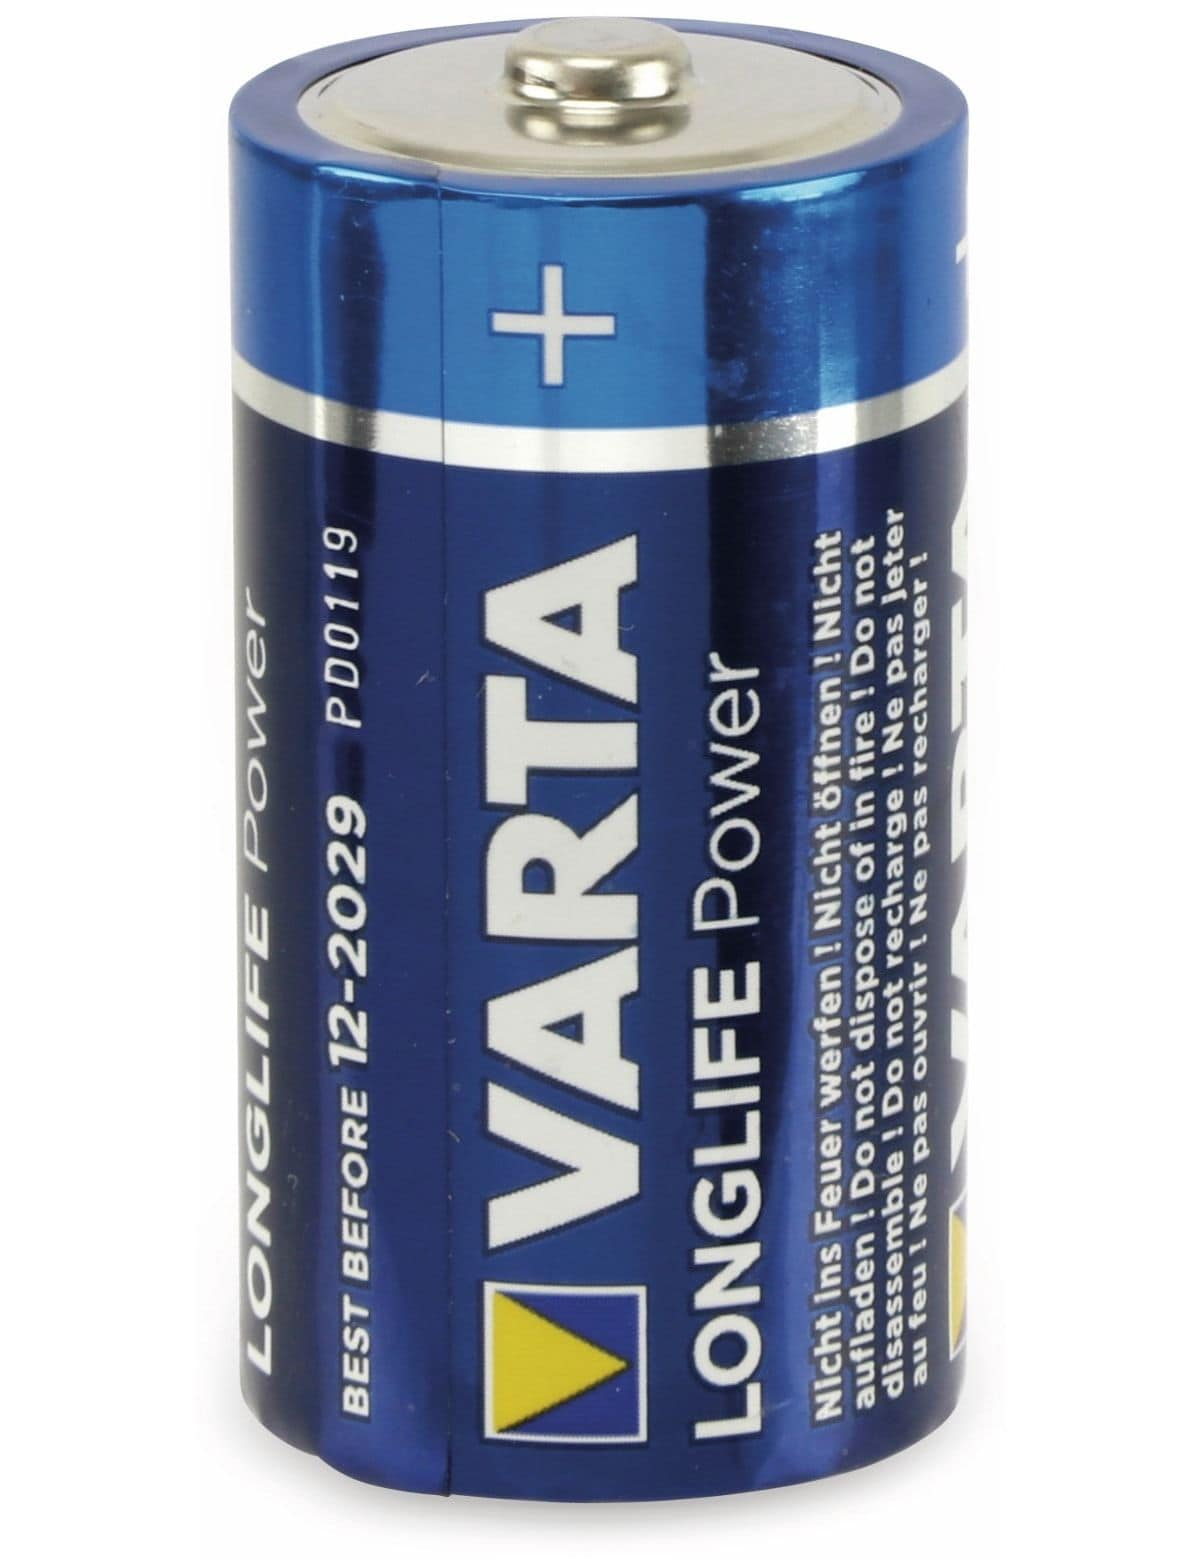 VARTA Longlife Power Baby AlMn, Volt, Ah 4914 Batterie, 7.8 C AlMn 1.5 (lose) LR14 Batterie